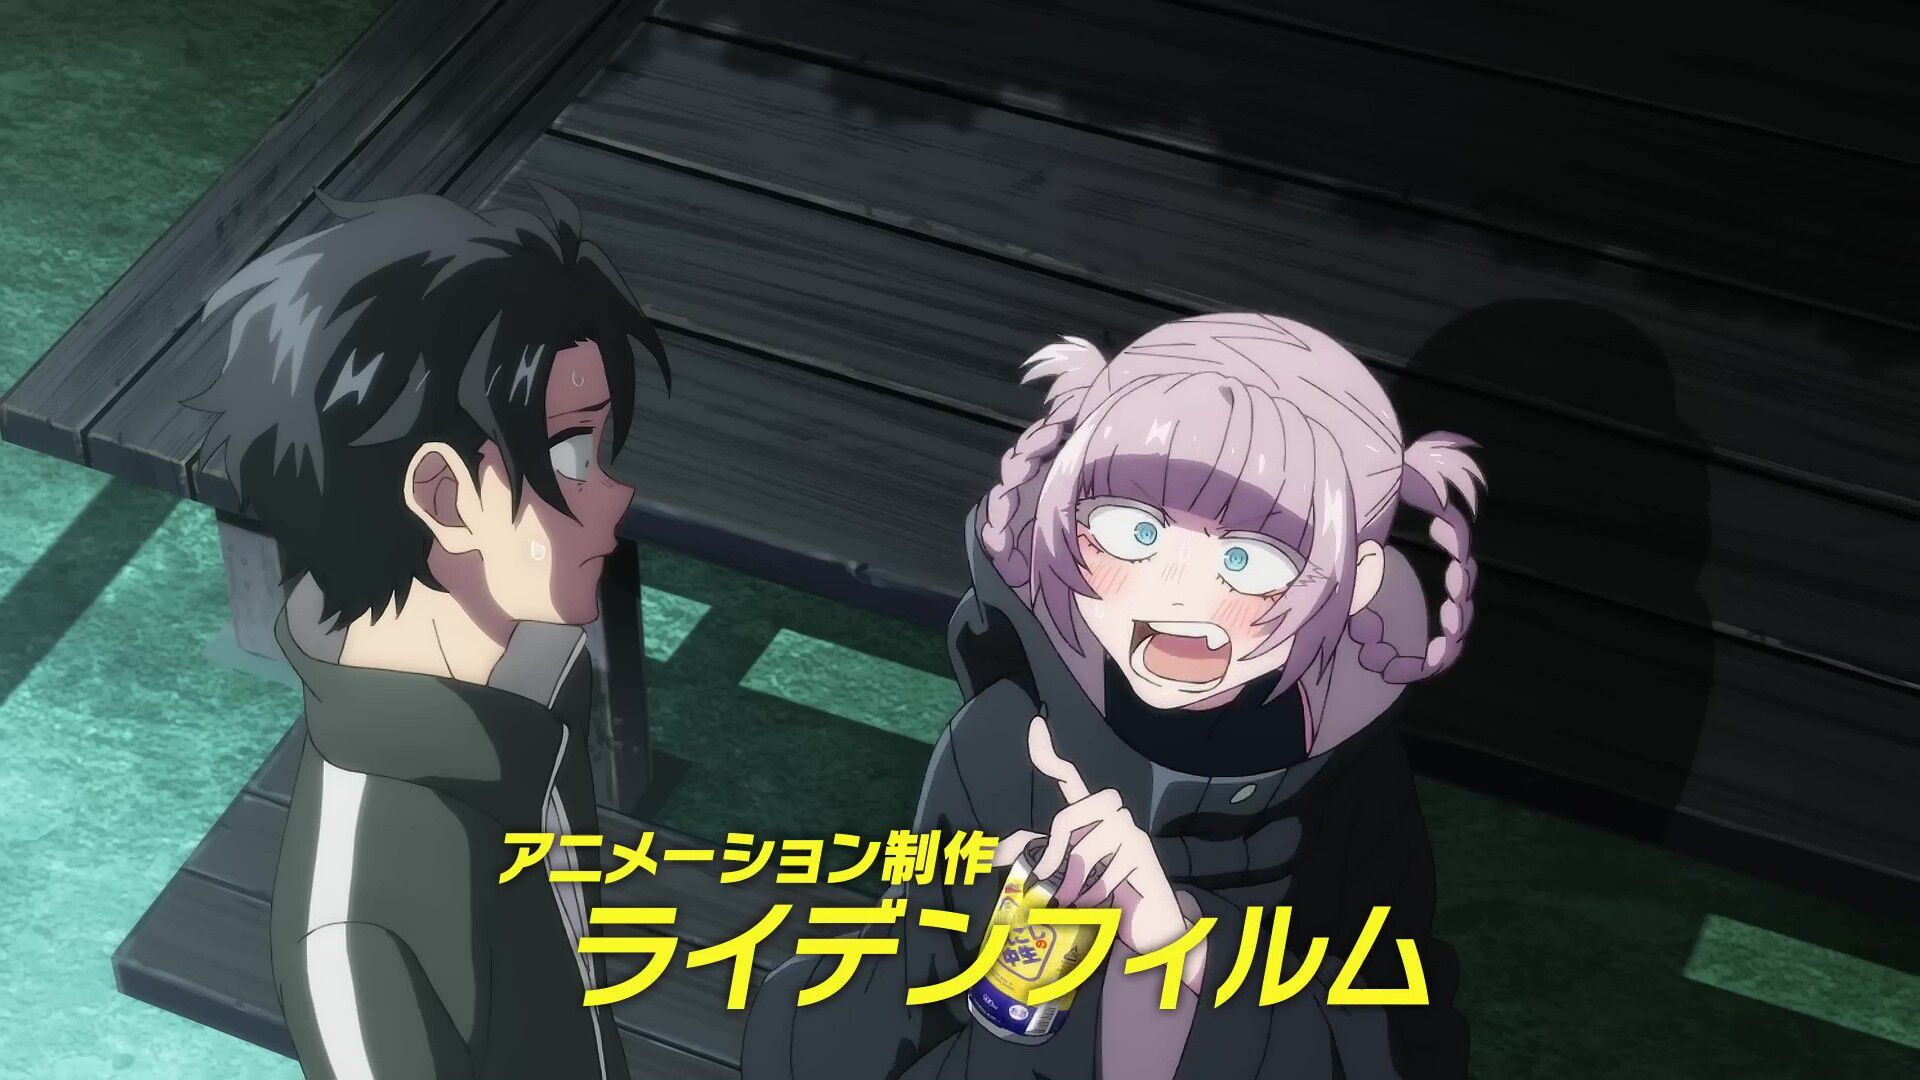 Anime "Yofukashi no Uta" A scene where you yapple with an erotic girl on a futon! Broadcasting starts in July 25